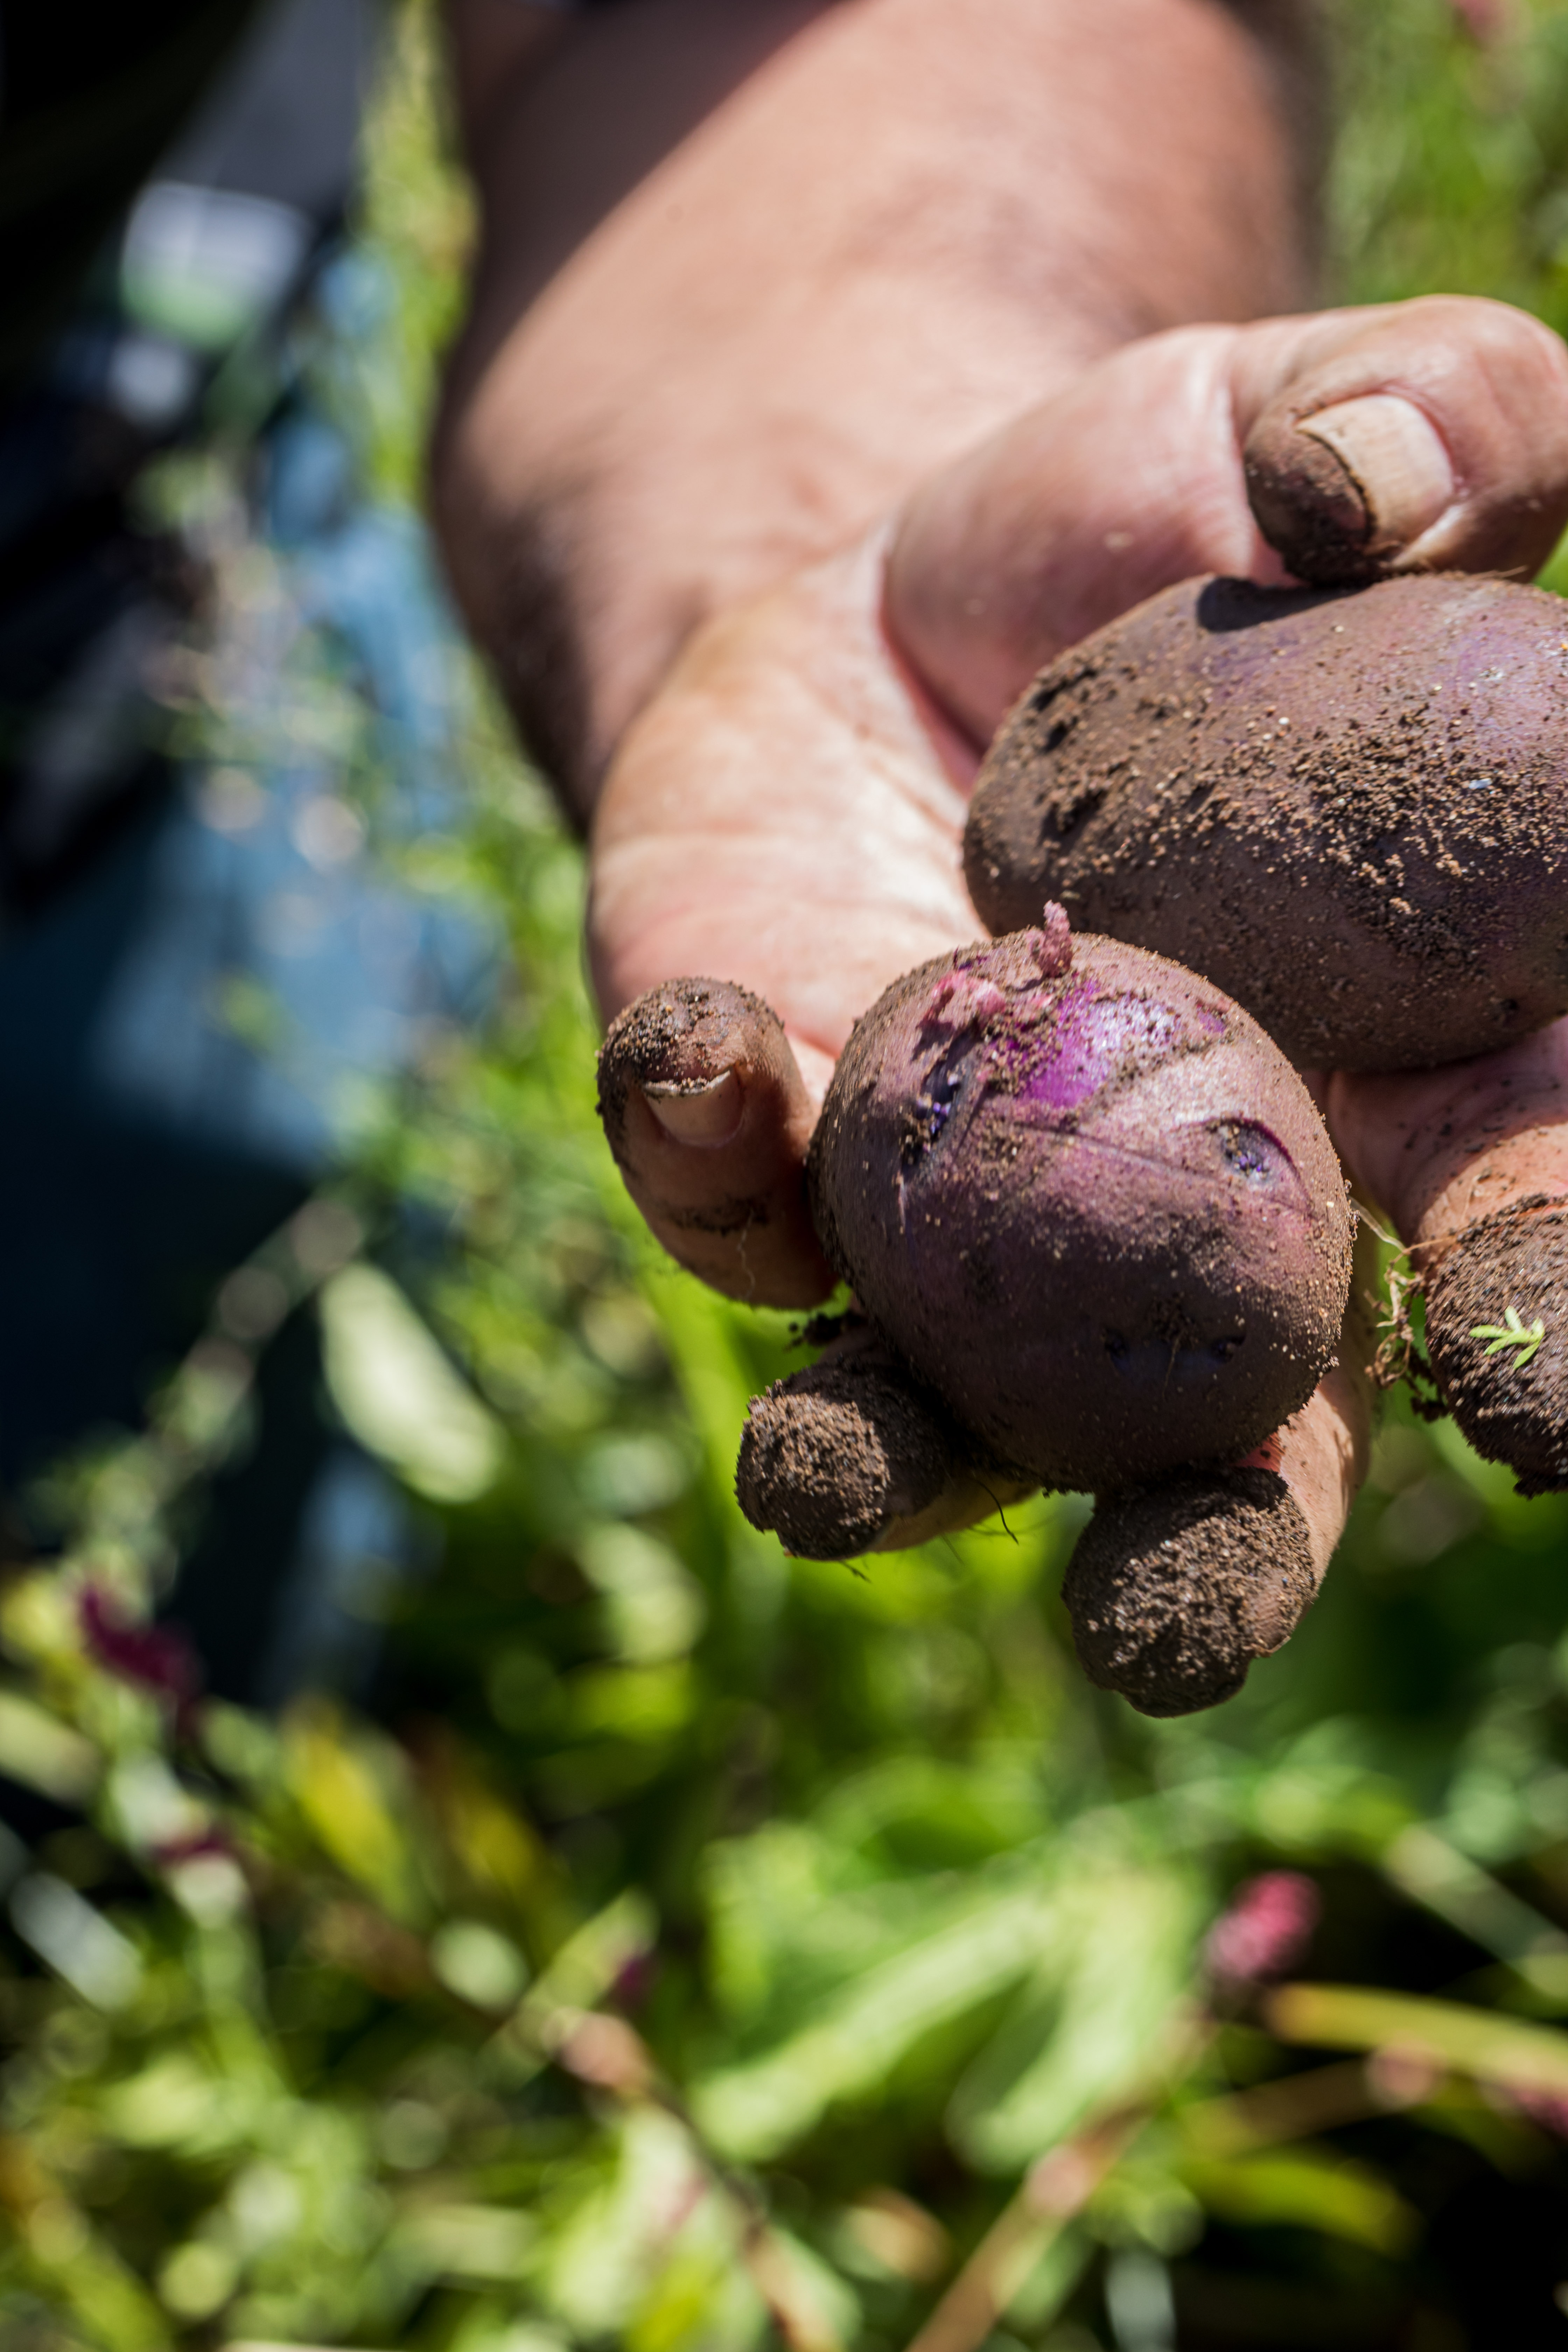 JSM Organics founder, Javier Zamora, showing off some freshly harvested purple potatoes.